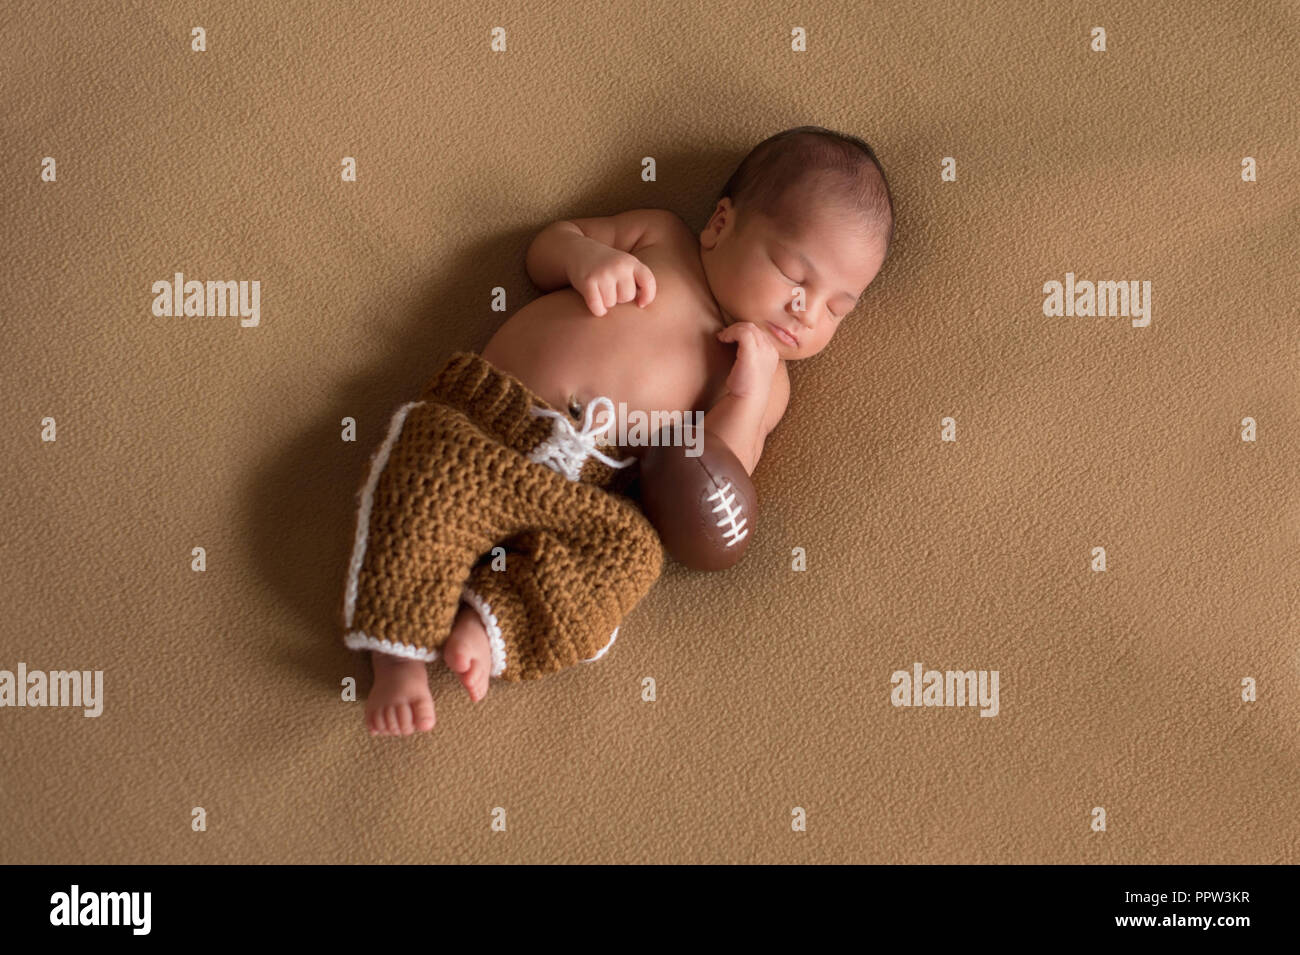 A sleeping, nine day old newborn baby boy wearing crocheted football uniform pants. Stock Photo